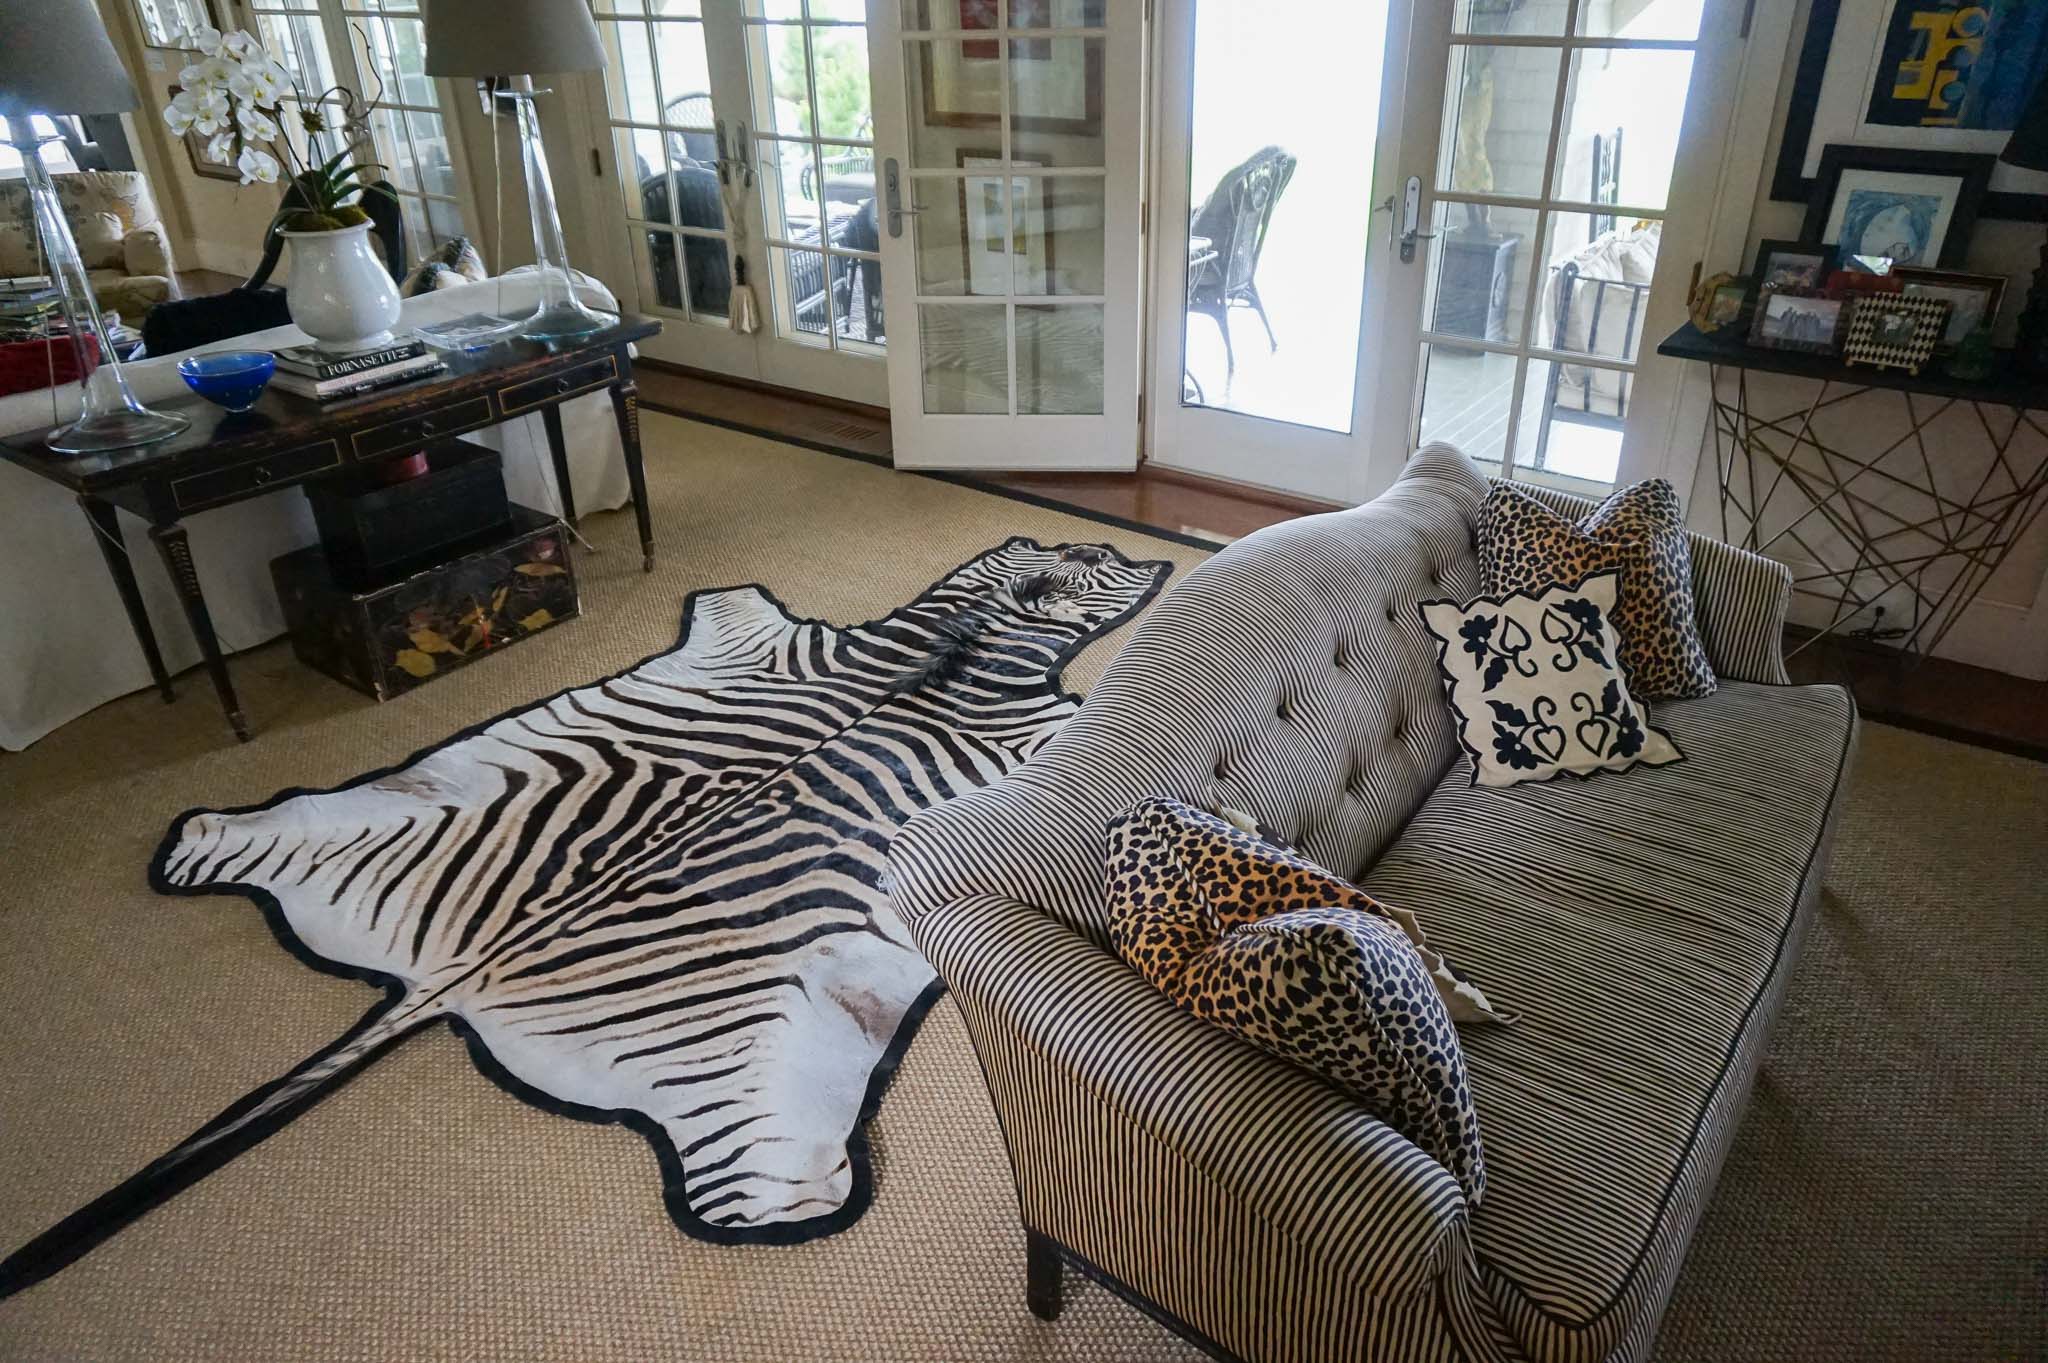 Zebra Hide Rug in a lounge area 